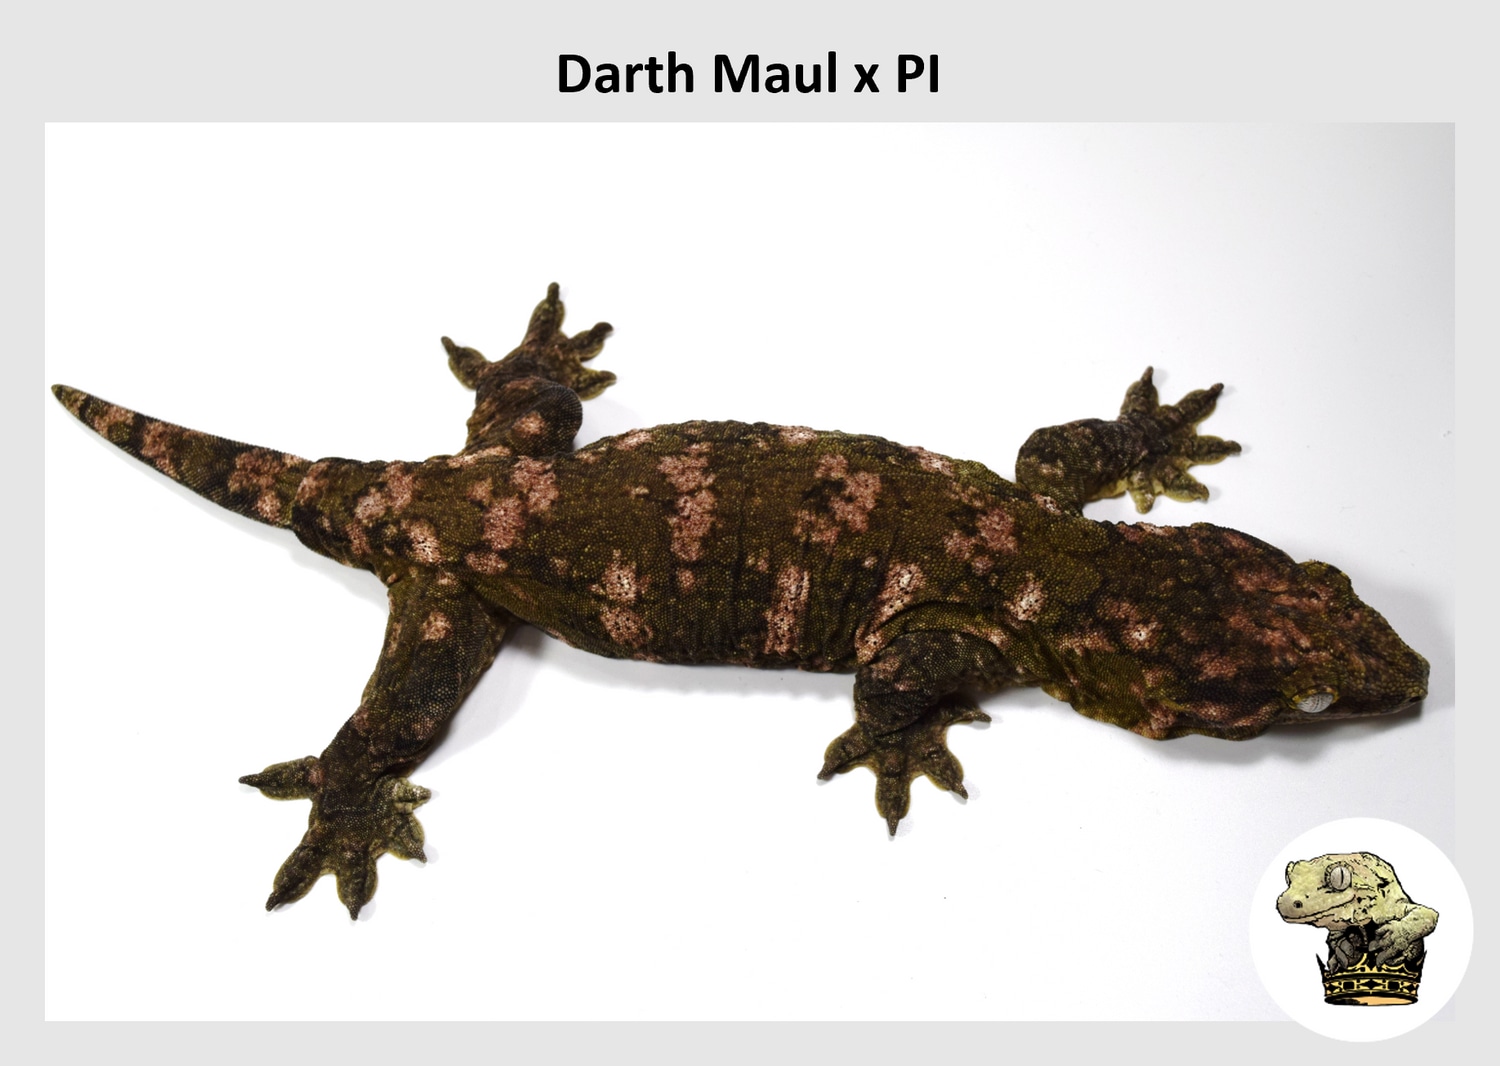 Darth Maul X Pine Island Leachianus Gecko by Troy's Geckos, Inc.